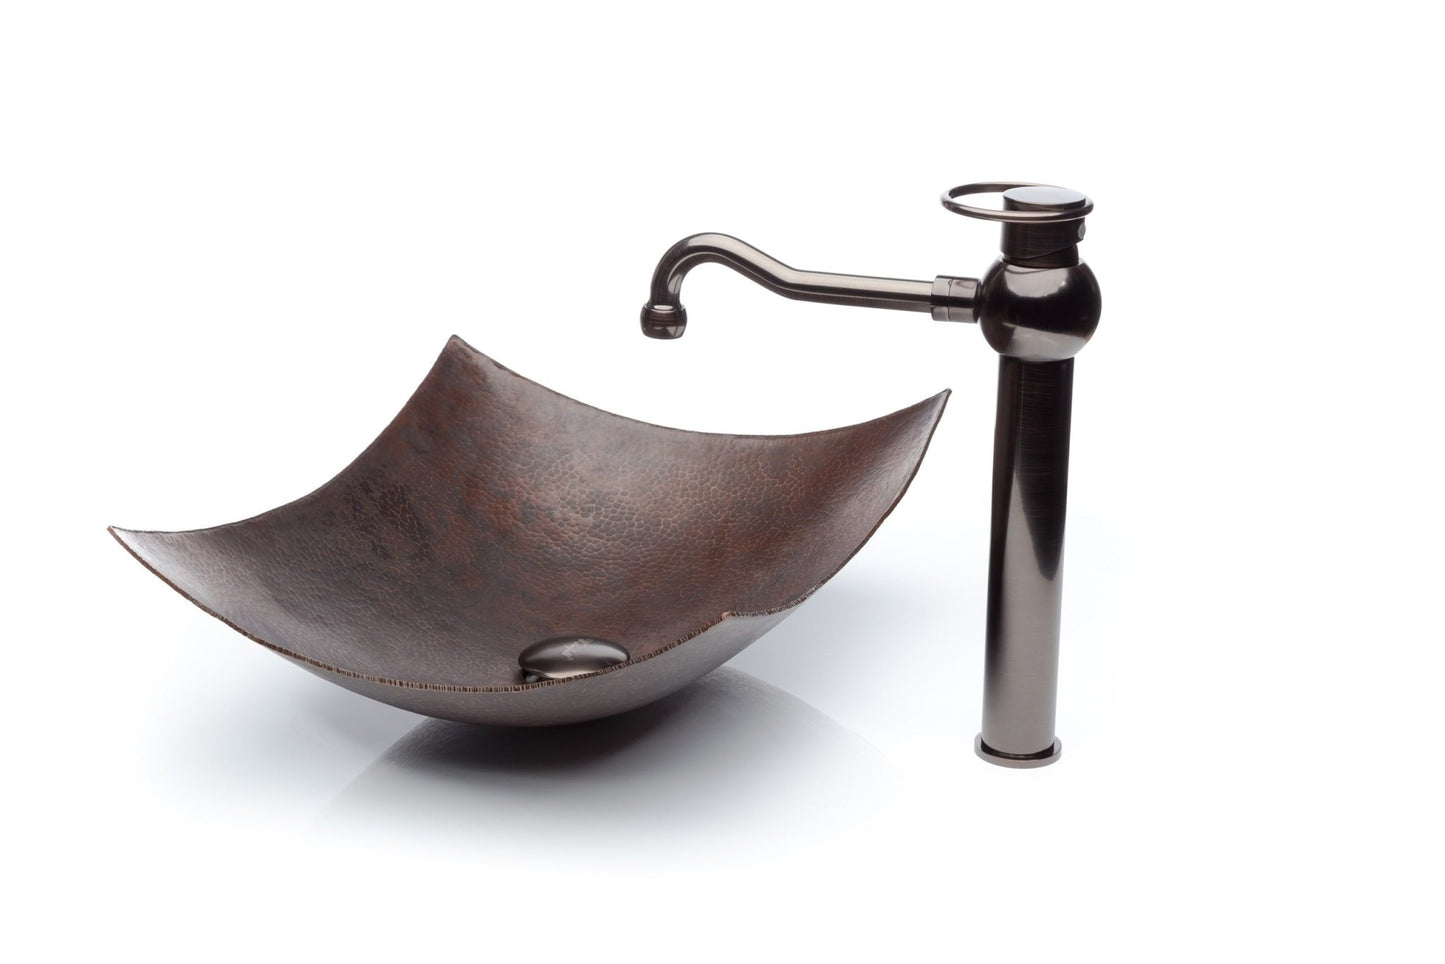 Sole Oil Rubbed Bronze Faucet with Industrial Copper Sink Combo Set - |VESIMI Design|